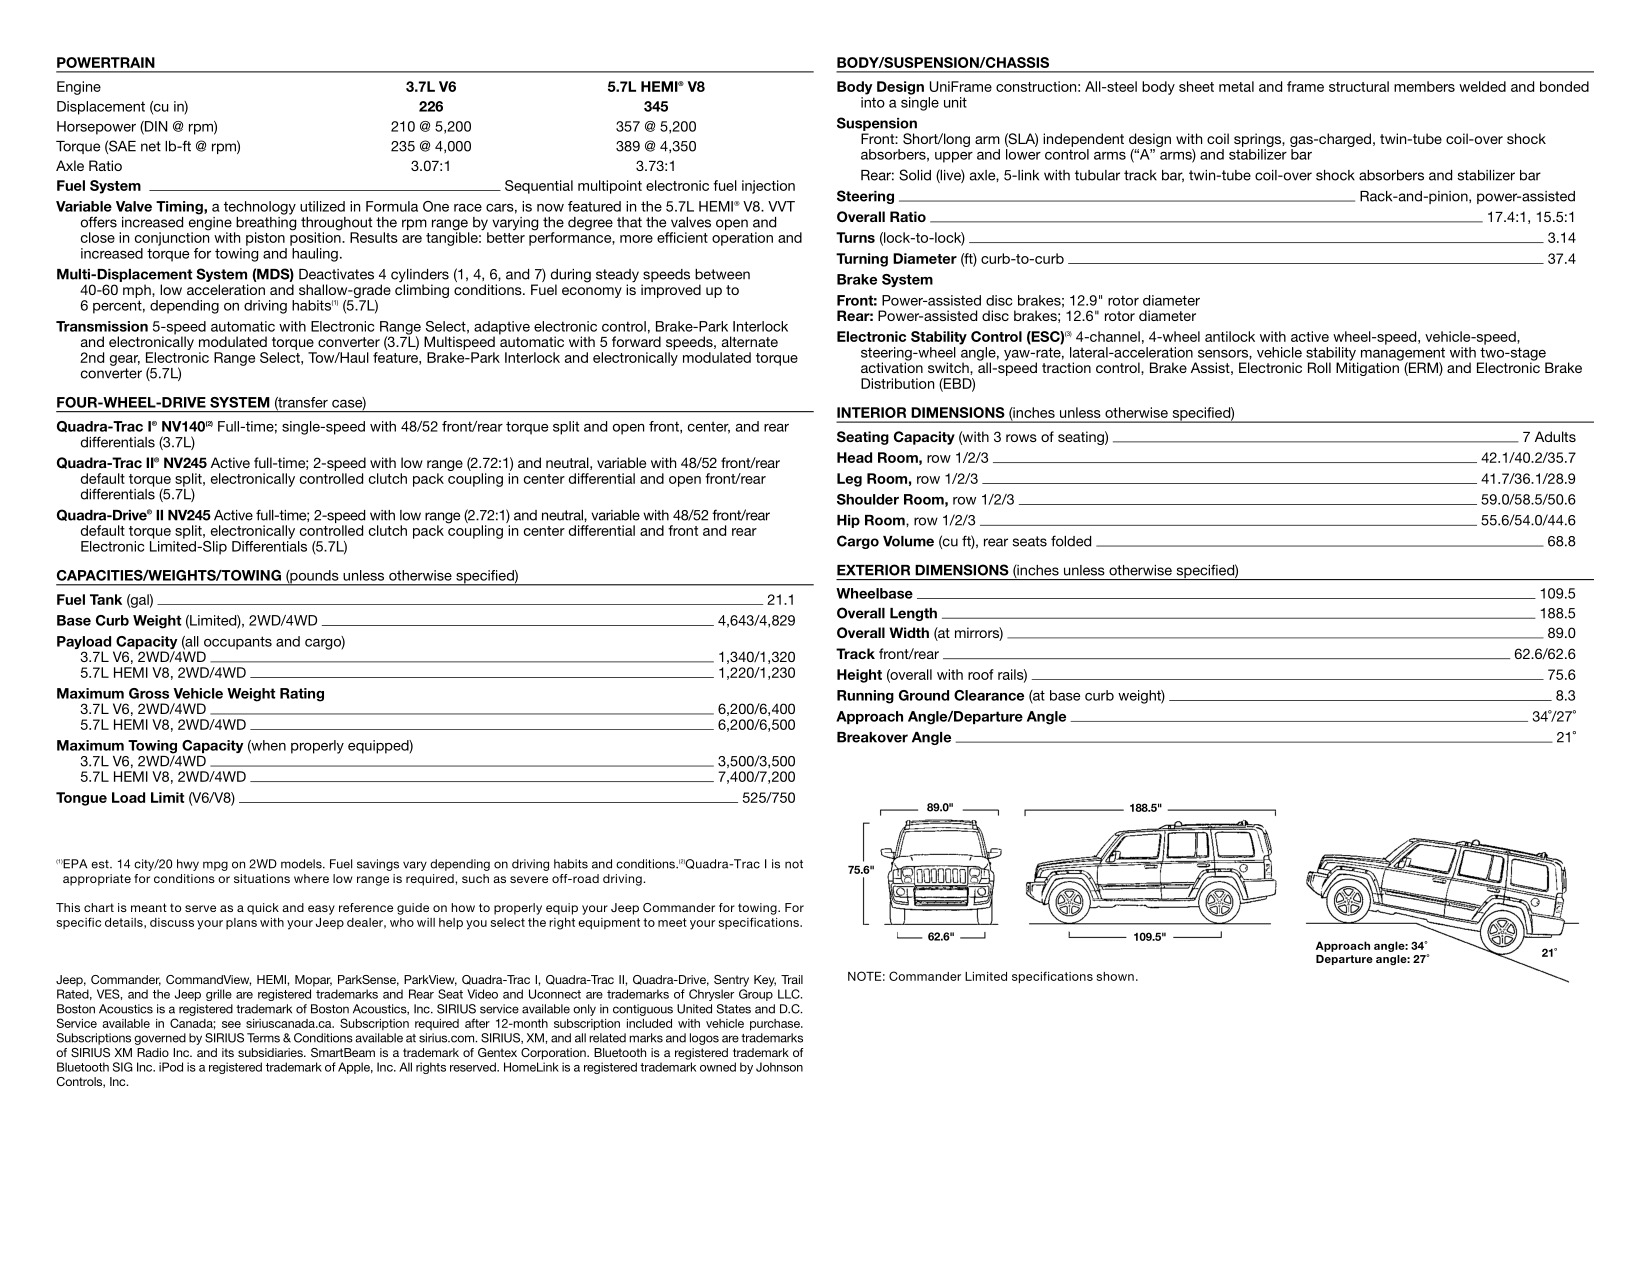 2010 Jeep Commander Brochure Page 15